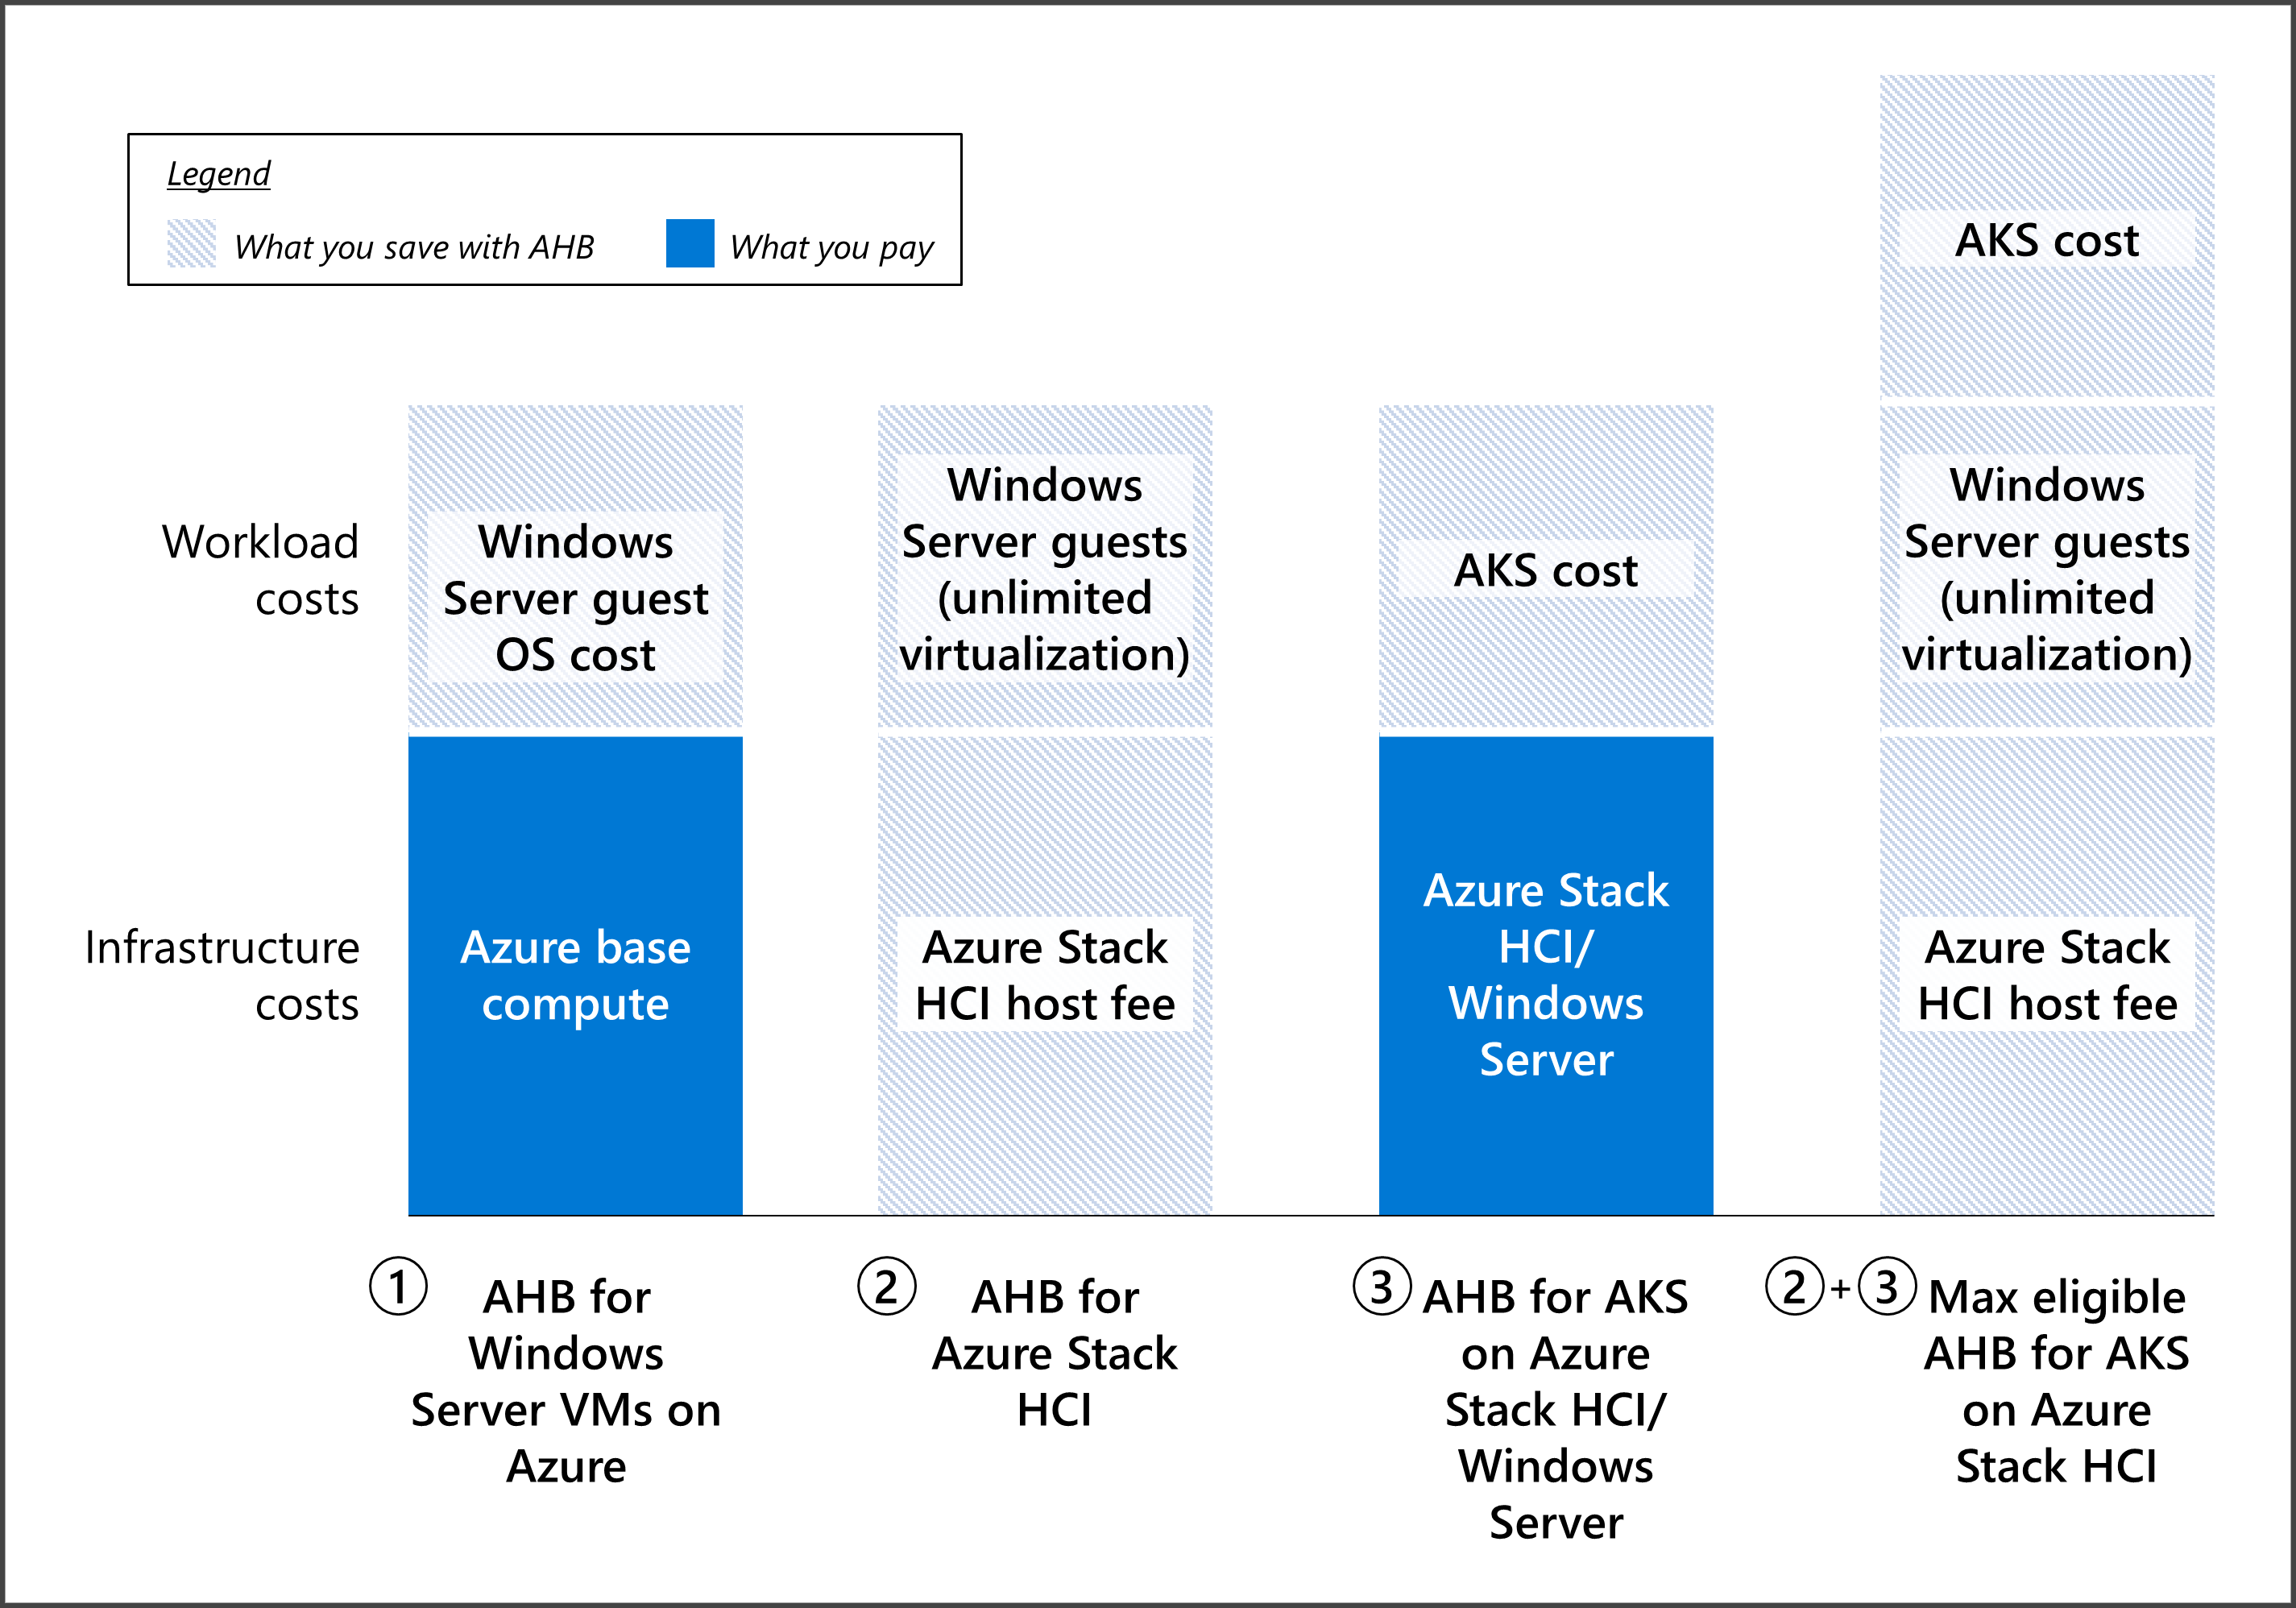 Illustration showing Azure Hybrid Benefit savings for Windows Server VMs on Azure, AKS on Azure Stack HCI and Windows Server.